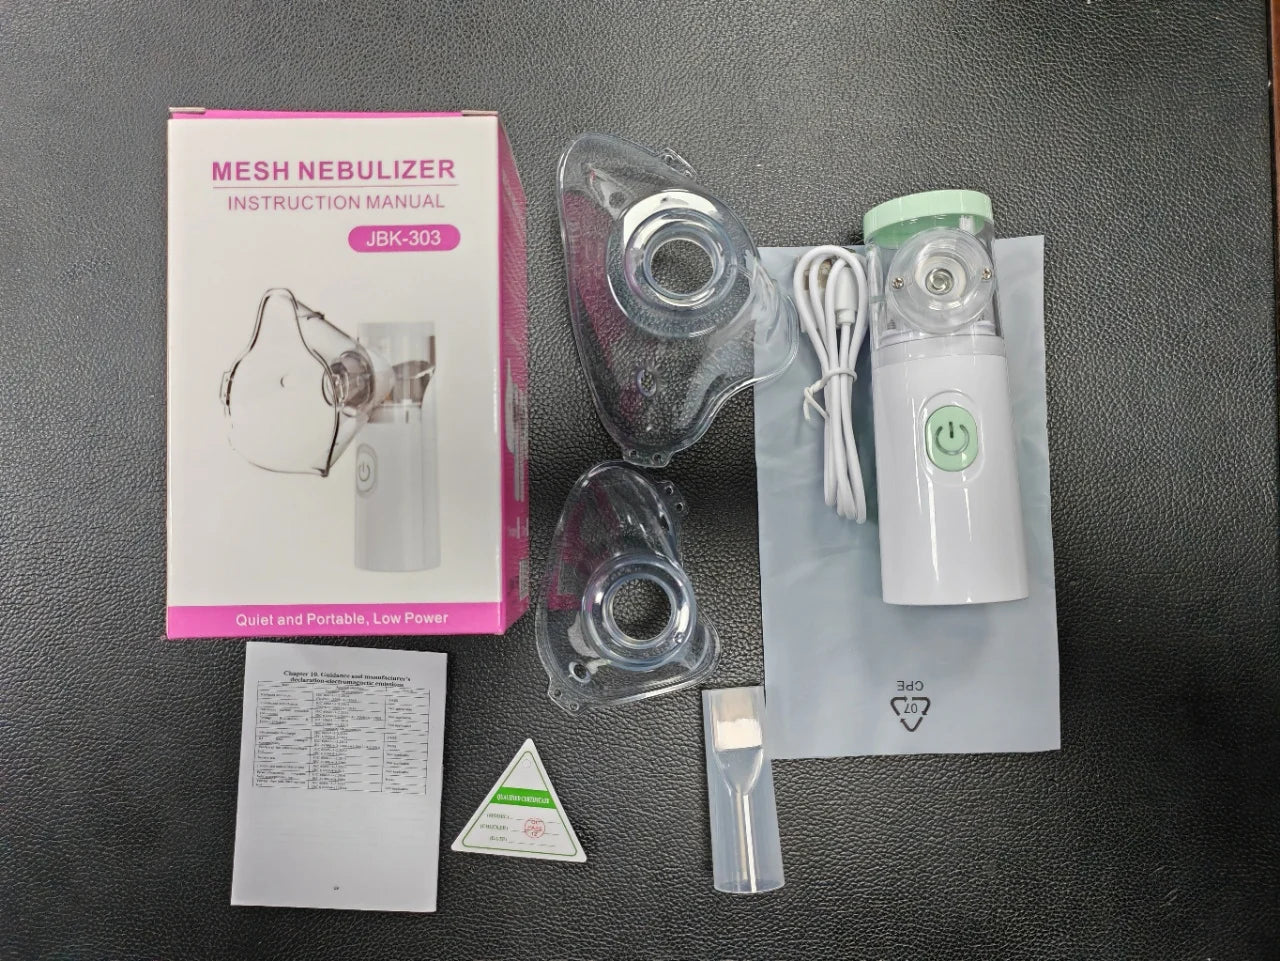 Medical Silent Mesh Nebulizer Handheld Asthma Inhaler Atomizer Children Health Care Mini Portable Nebulizer Humidifier